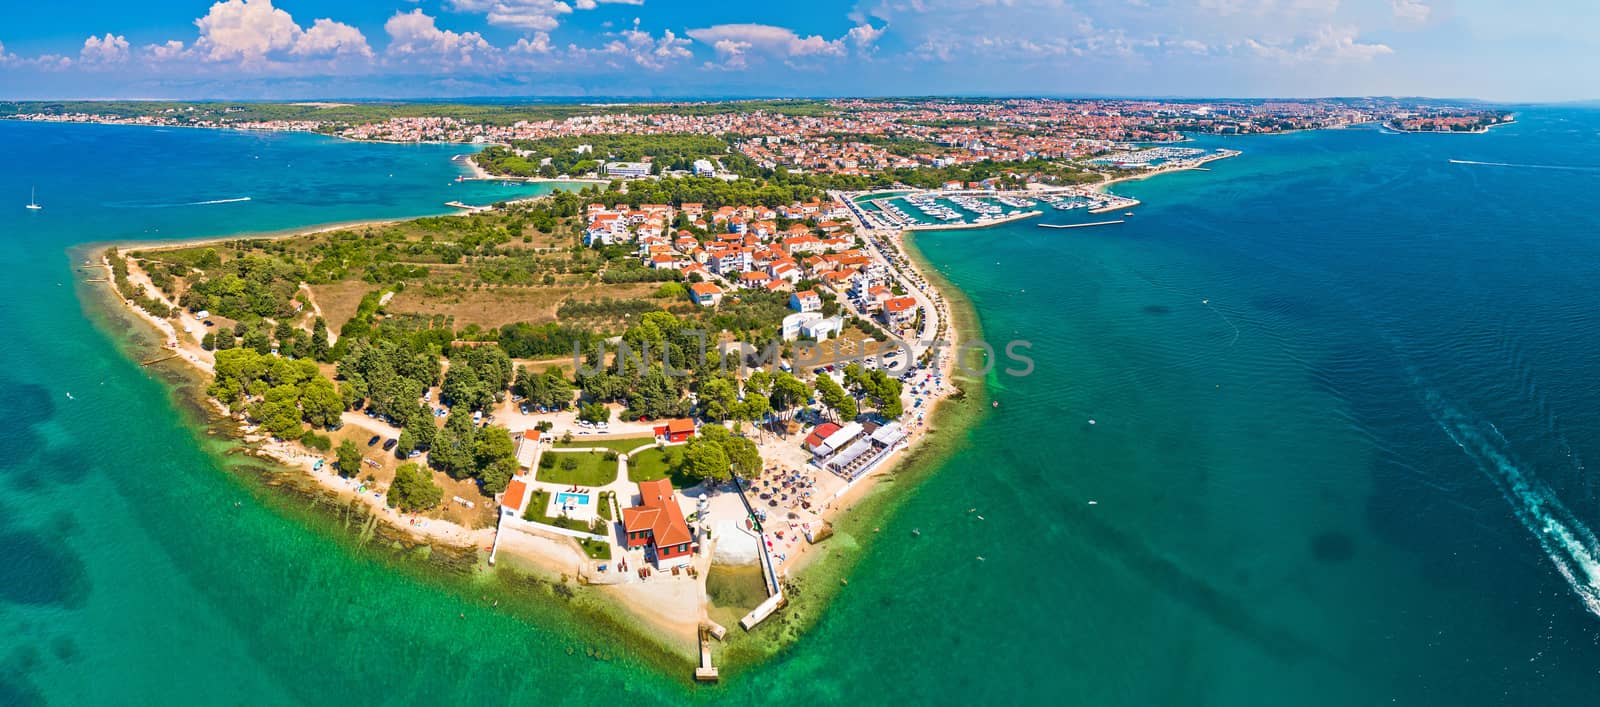 Puntamika peninsula of Zadar aerial panoramic view, Dalmatia region of Croatia